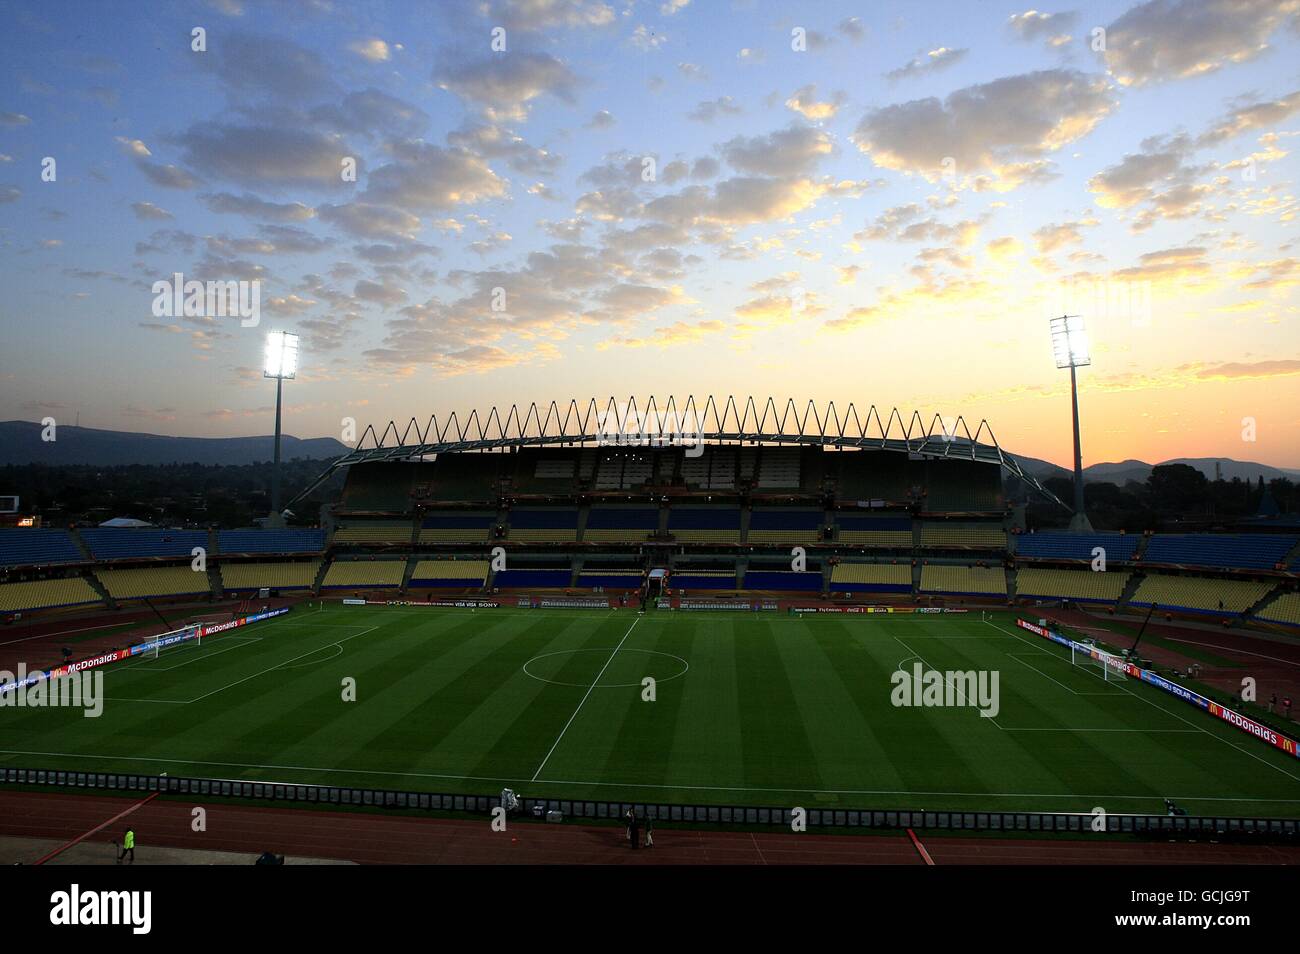 General view of the Royal Bafokeng Stadium ahead of kick off Stock Photo